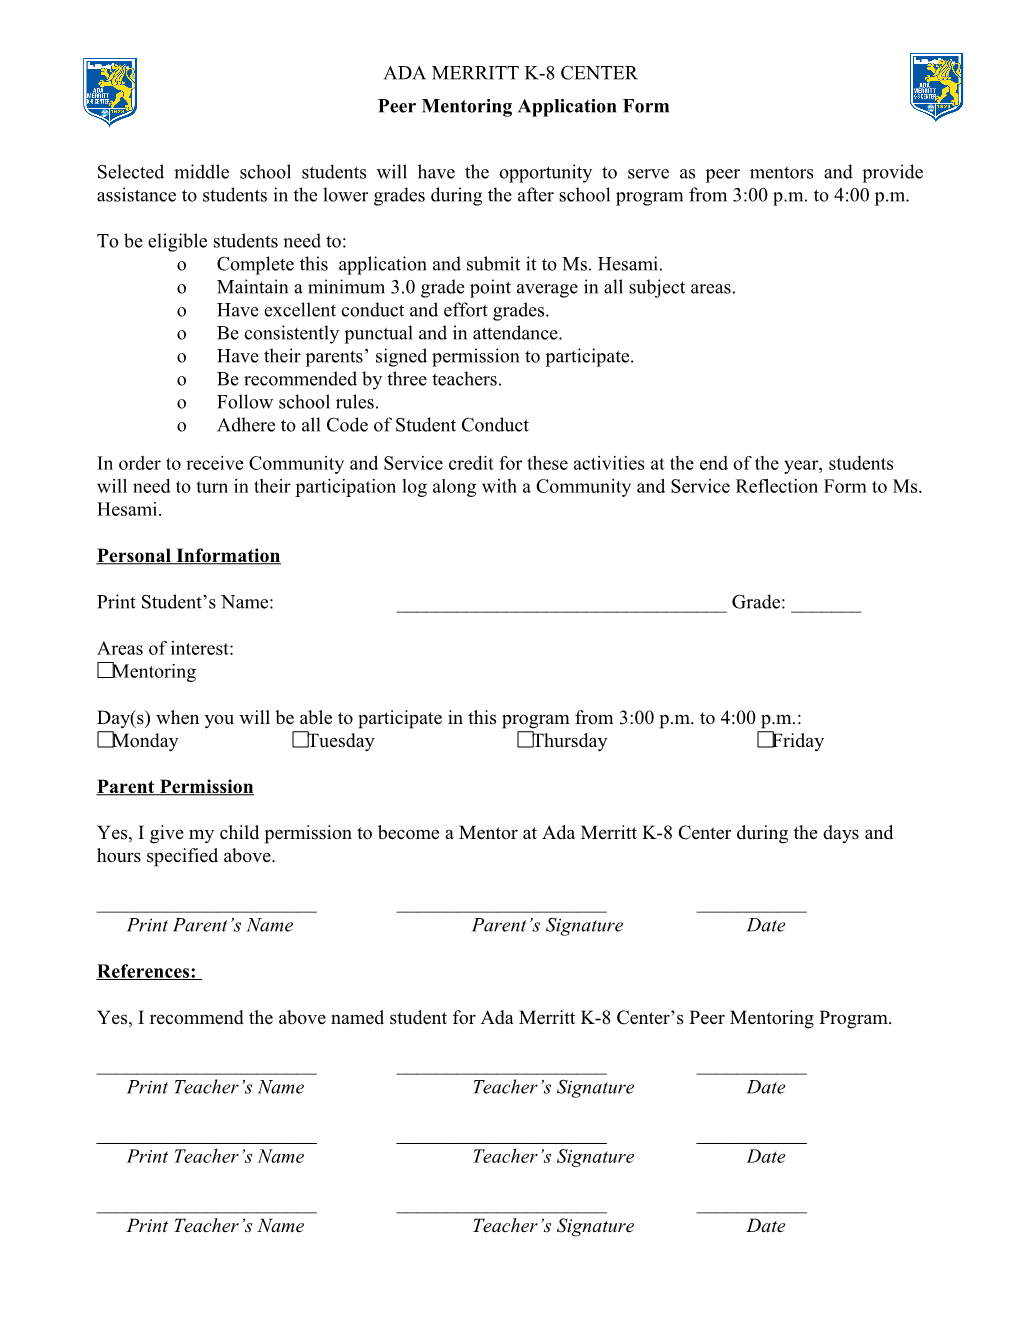 Peer Mentoring Application Form